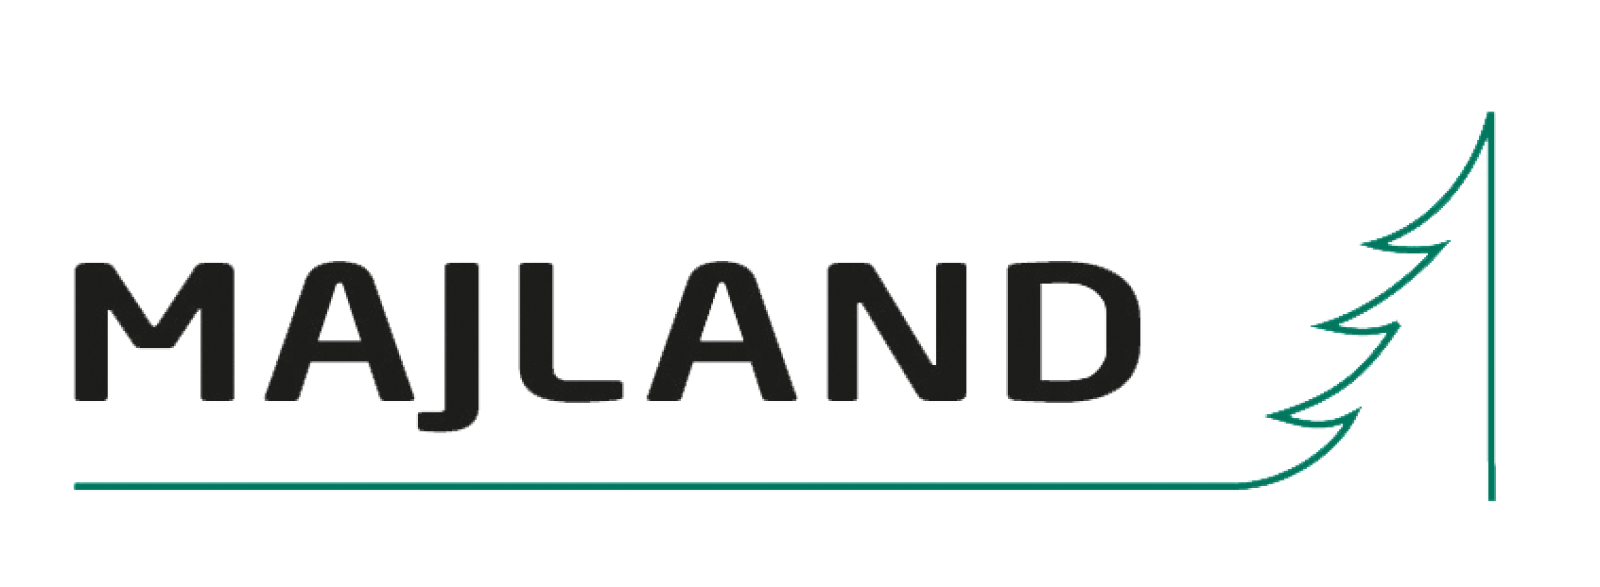 Majland-logo